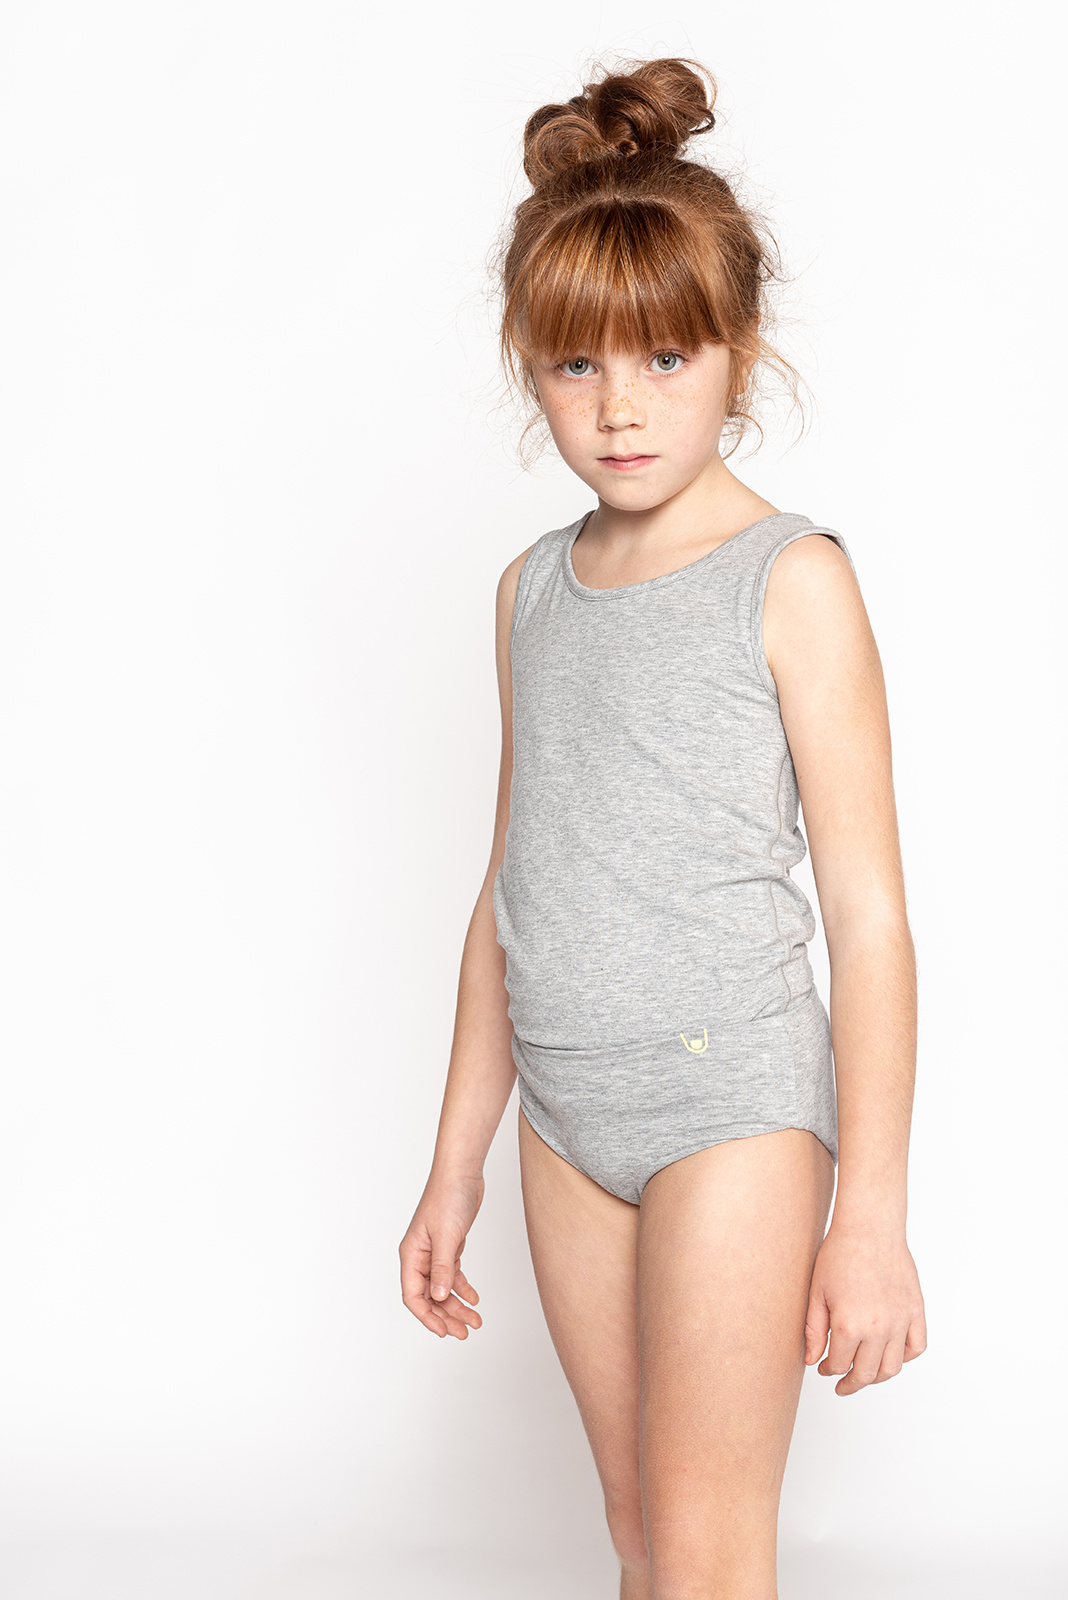 Help! Geen enkel ondergoed lekker voor gevoelige dochter SAM, Sensory & More